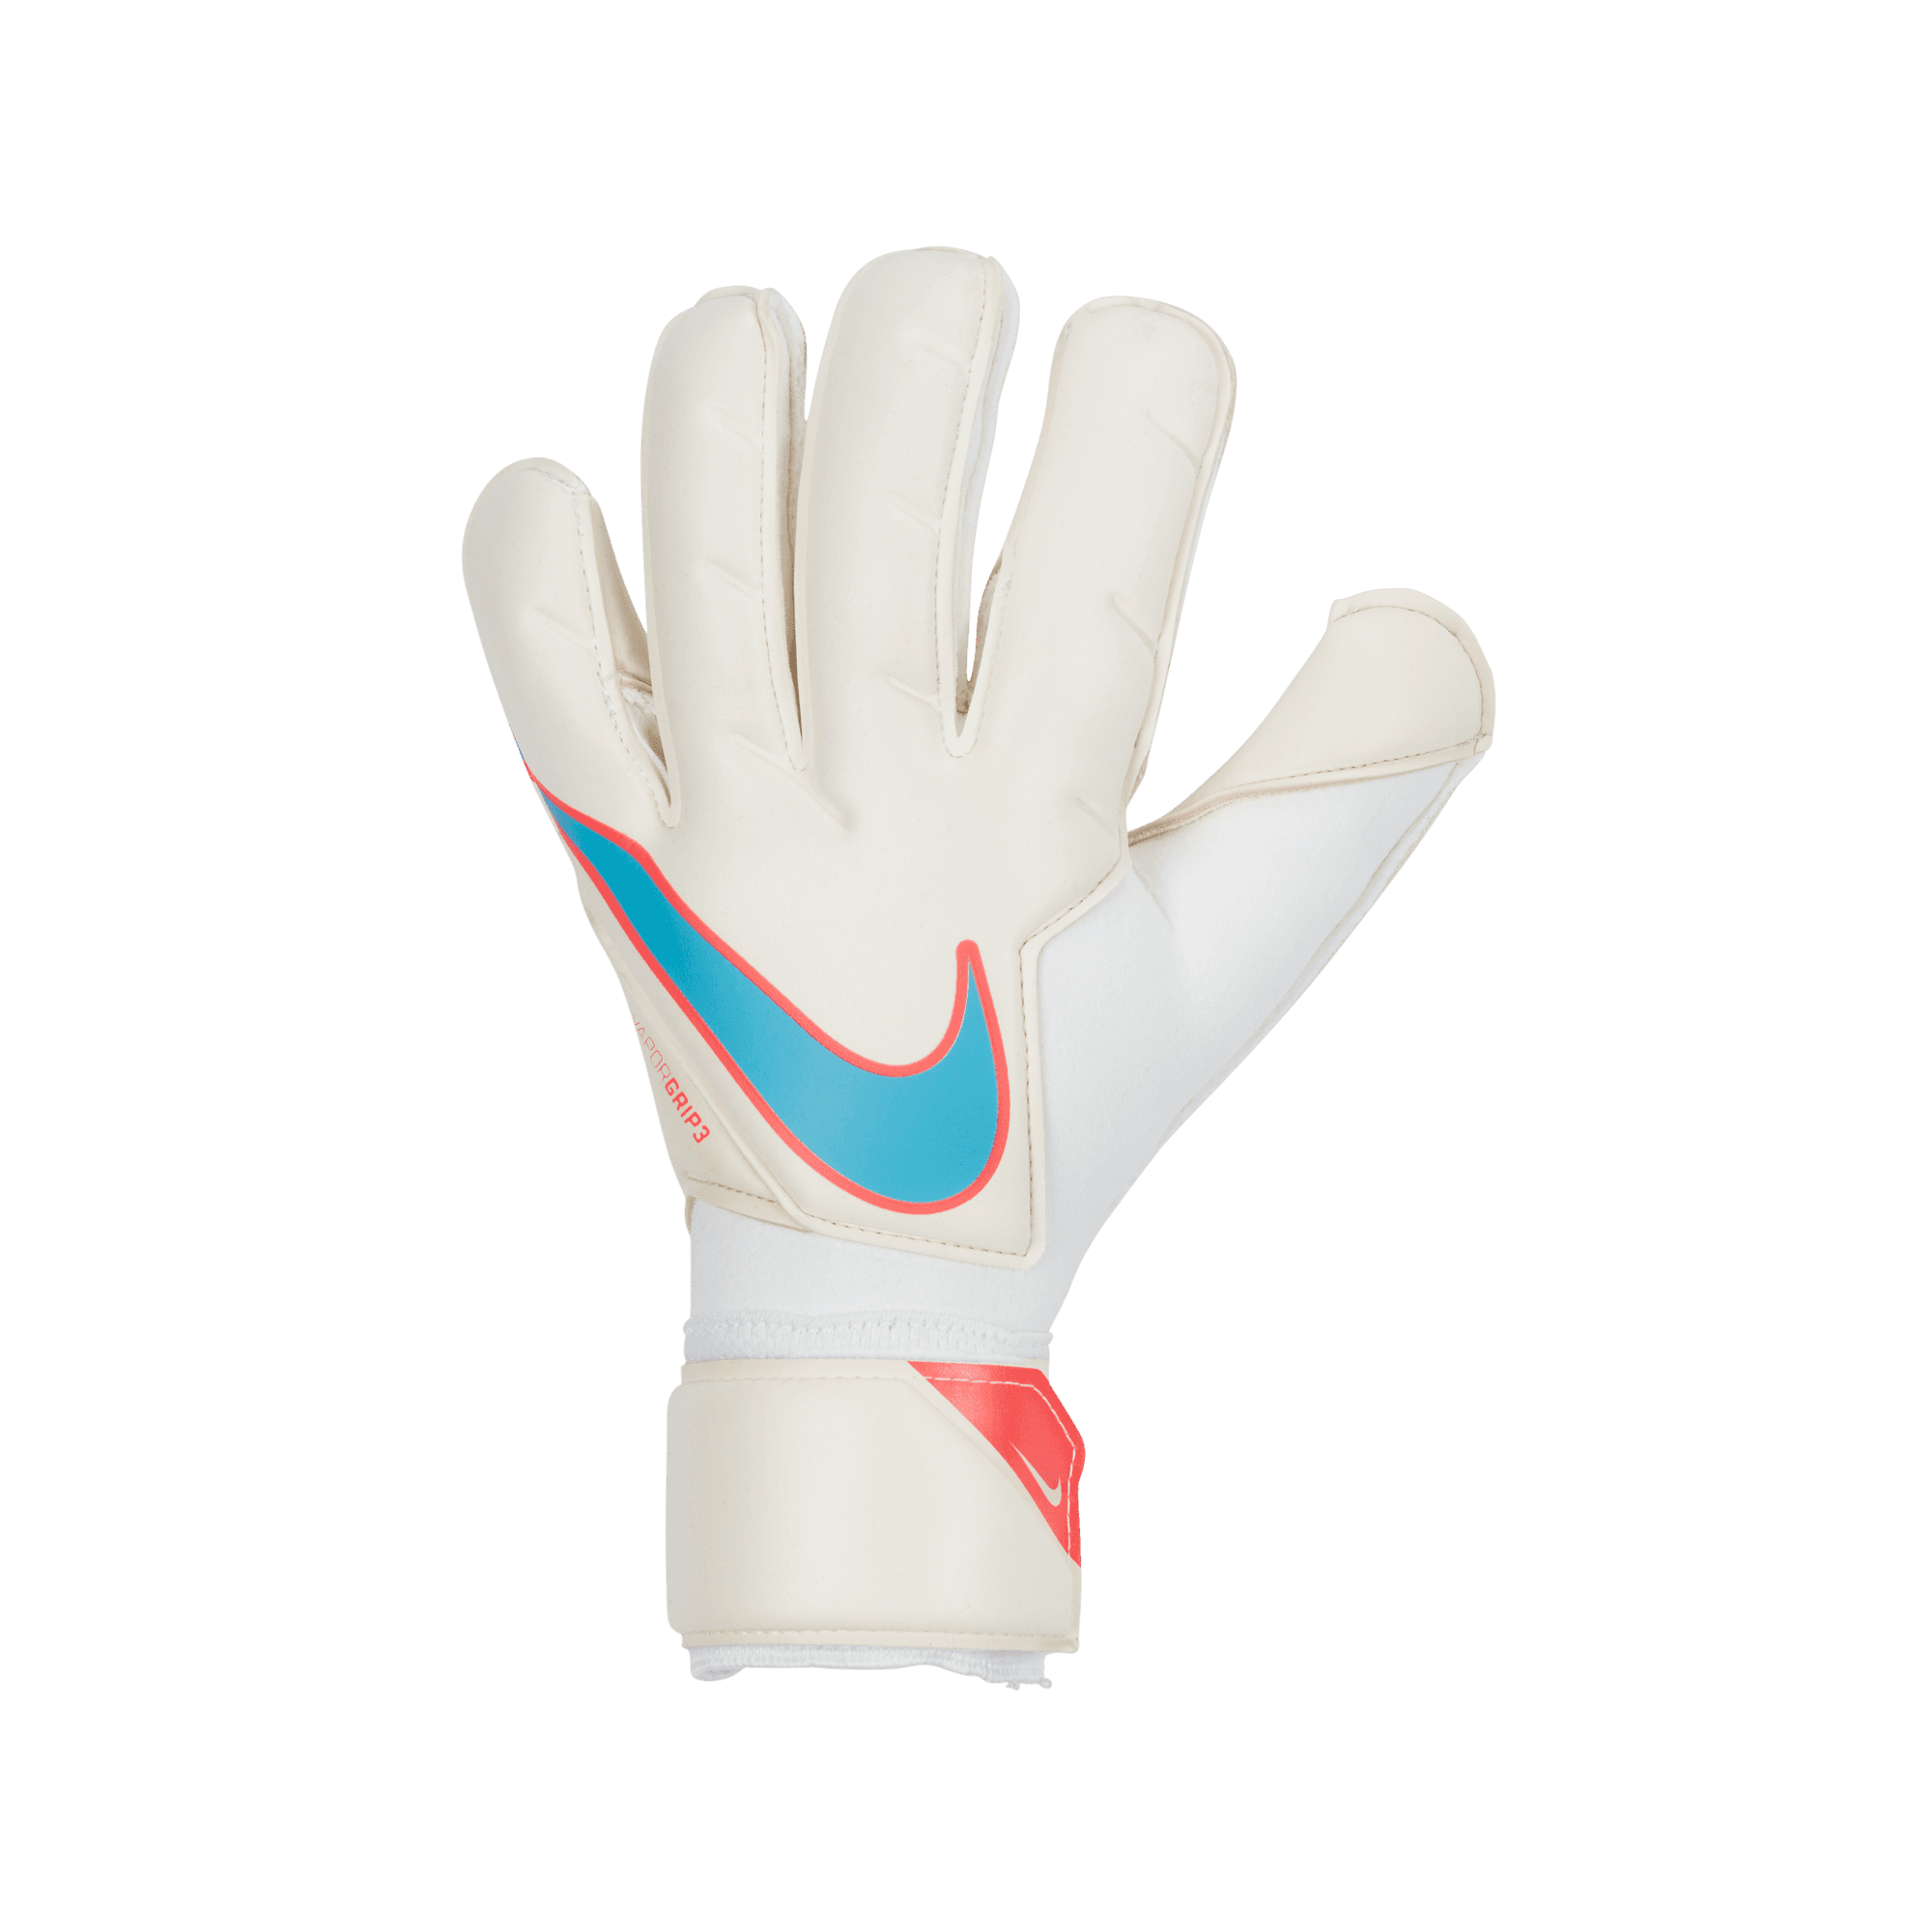 Stefans Soccer - Wisconsin - Vapor Grip3 GK Glove - White / Baltic Blue